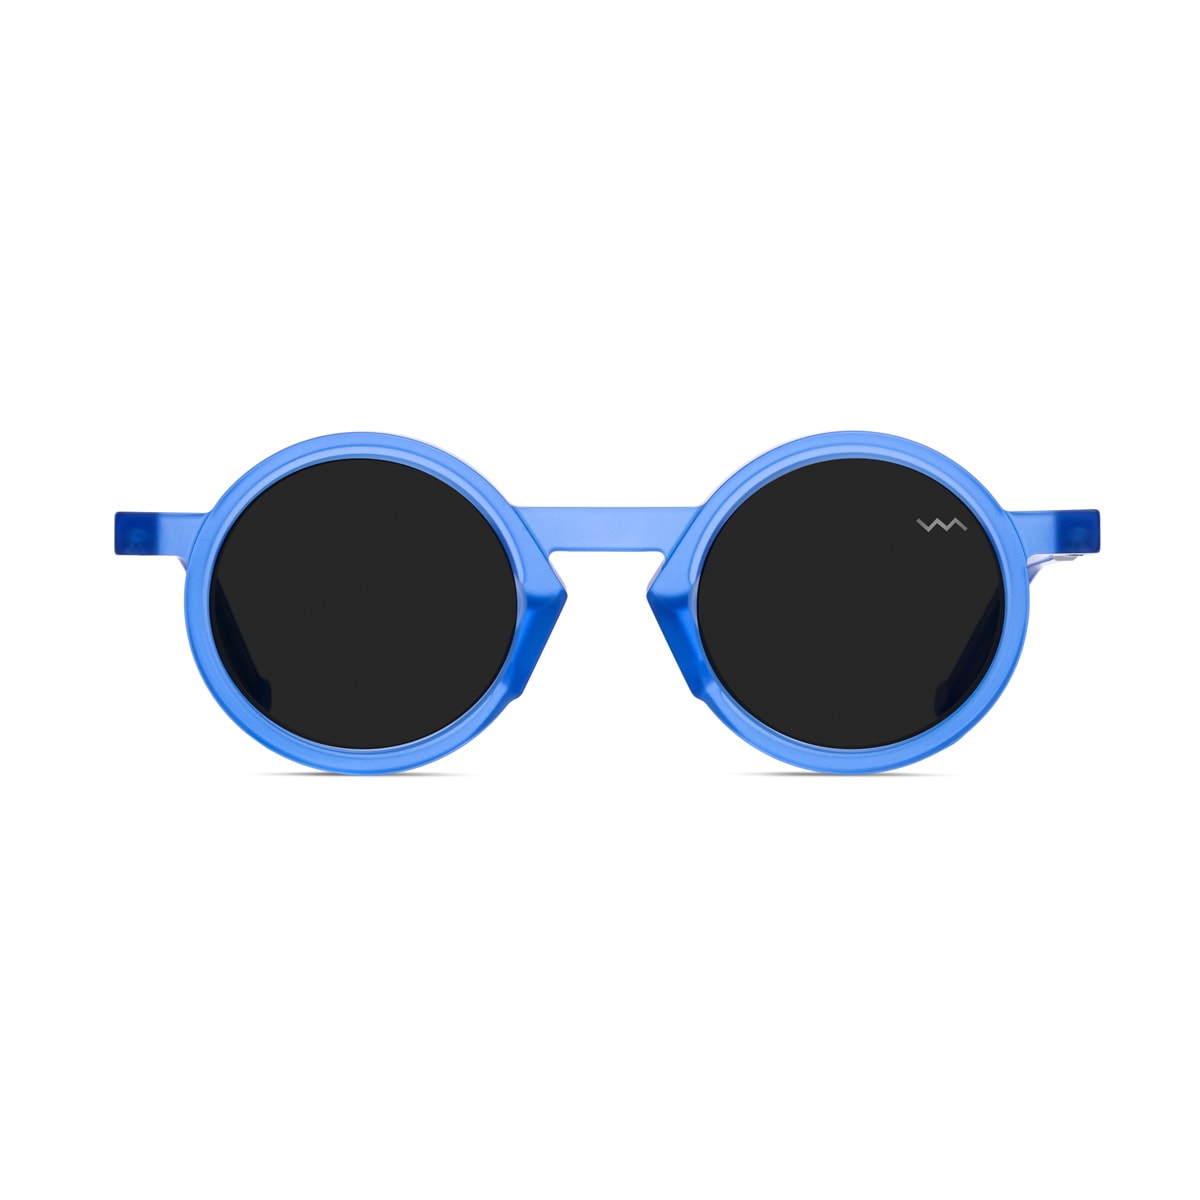 Wl0040 White Label Crystal Blue Matte Sunglasses